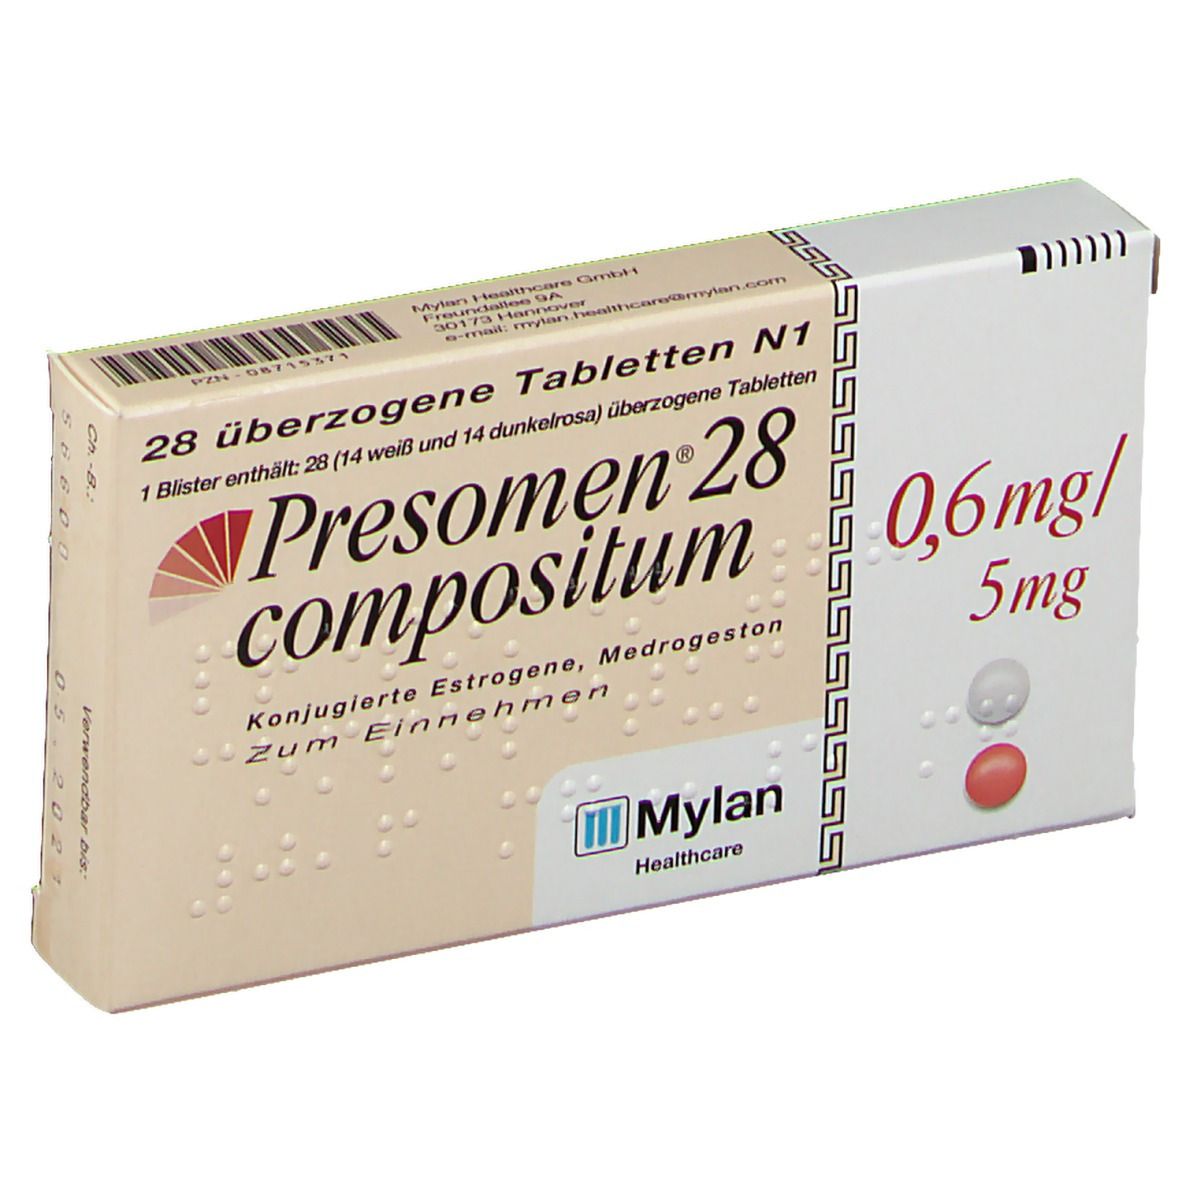 Presomen® 28 compositum 0,6 mg/5 mg